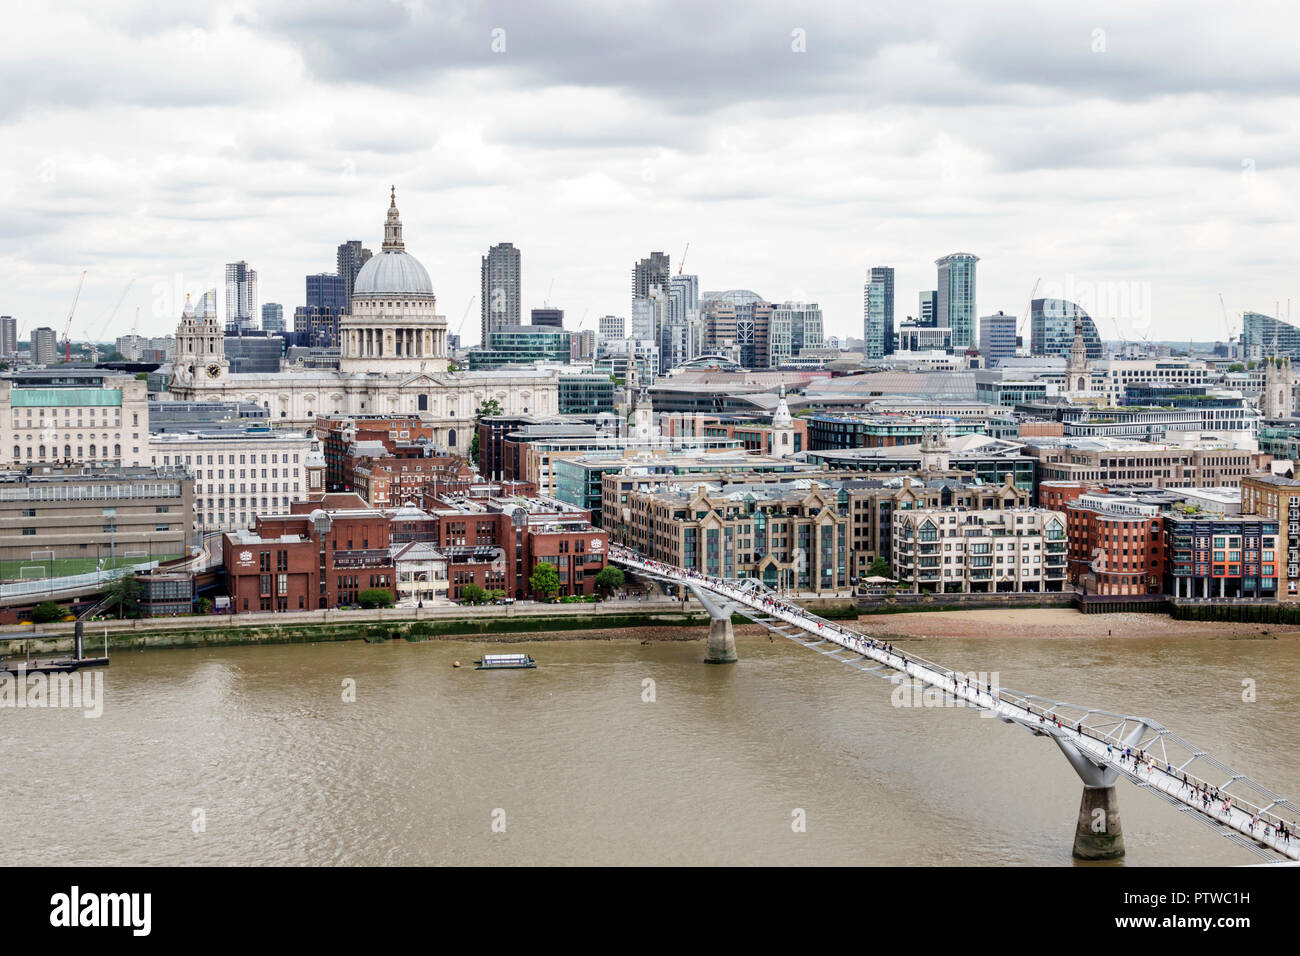 London England, Großbritannien, Bankside, Themse, Tate Modern Art Museum, Terrassenblick, Skyline der Stadt, grauer Himmel, Millennium Bridge, Hängebrücke, St. Paul's Ca Stockfoto